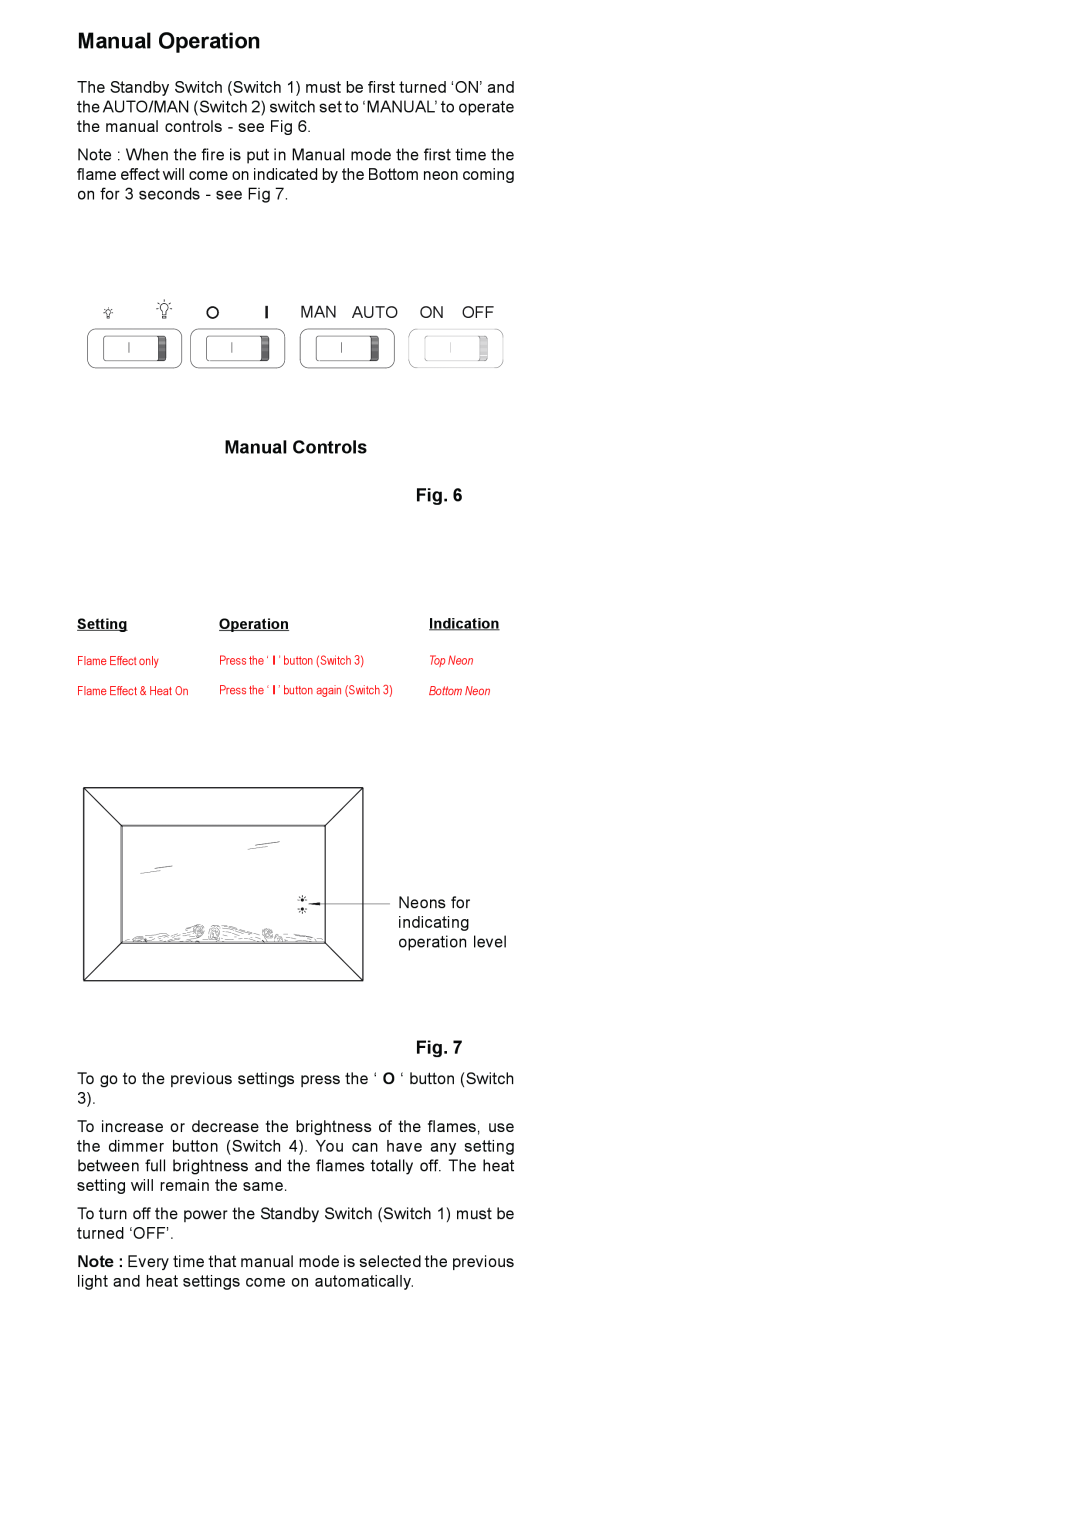 Faber SP4 dimensions Manual Operation, Manual Controls Fig 